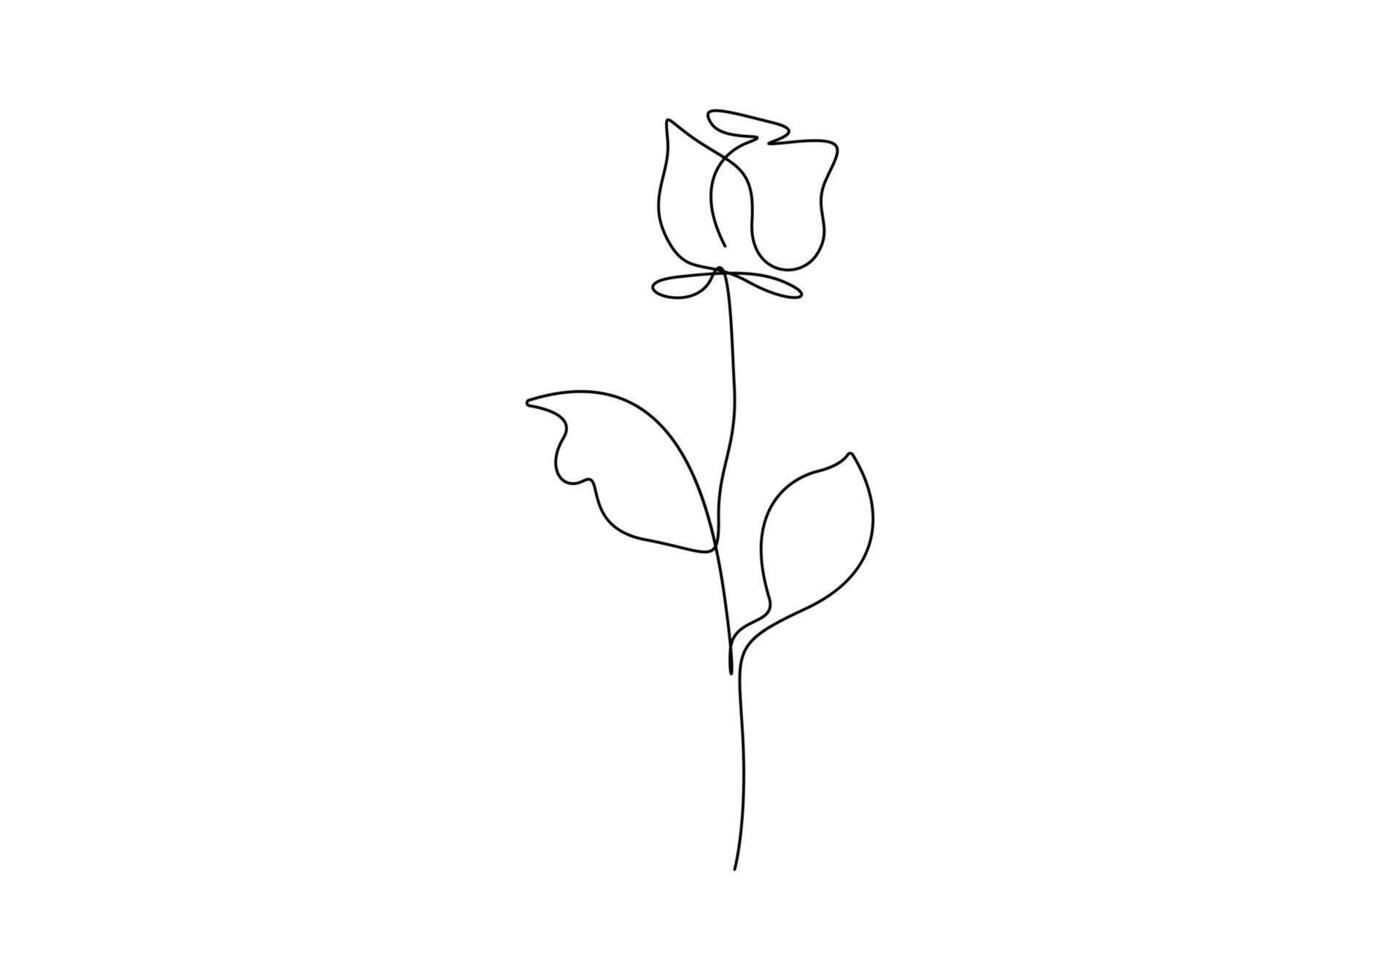 reste sig blomma kontinuerlig ett linje teckning premie illustration vektor